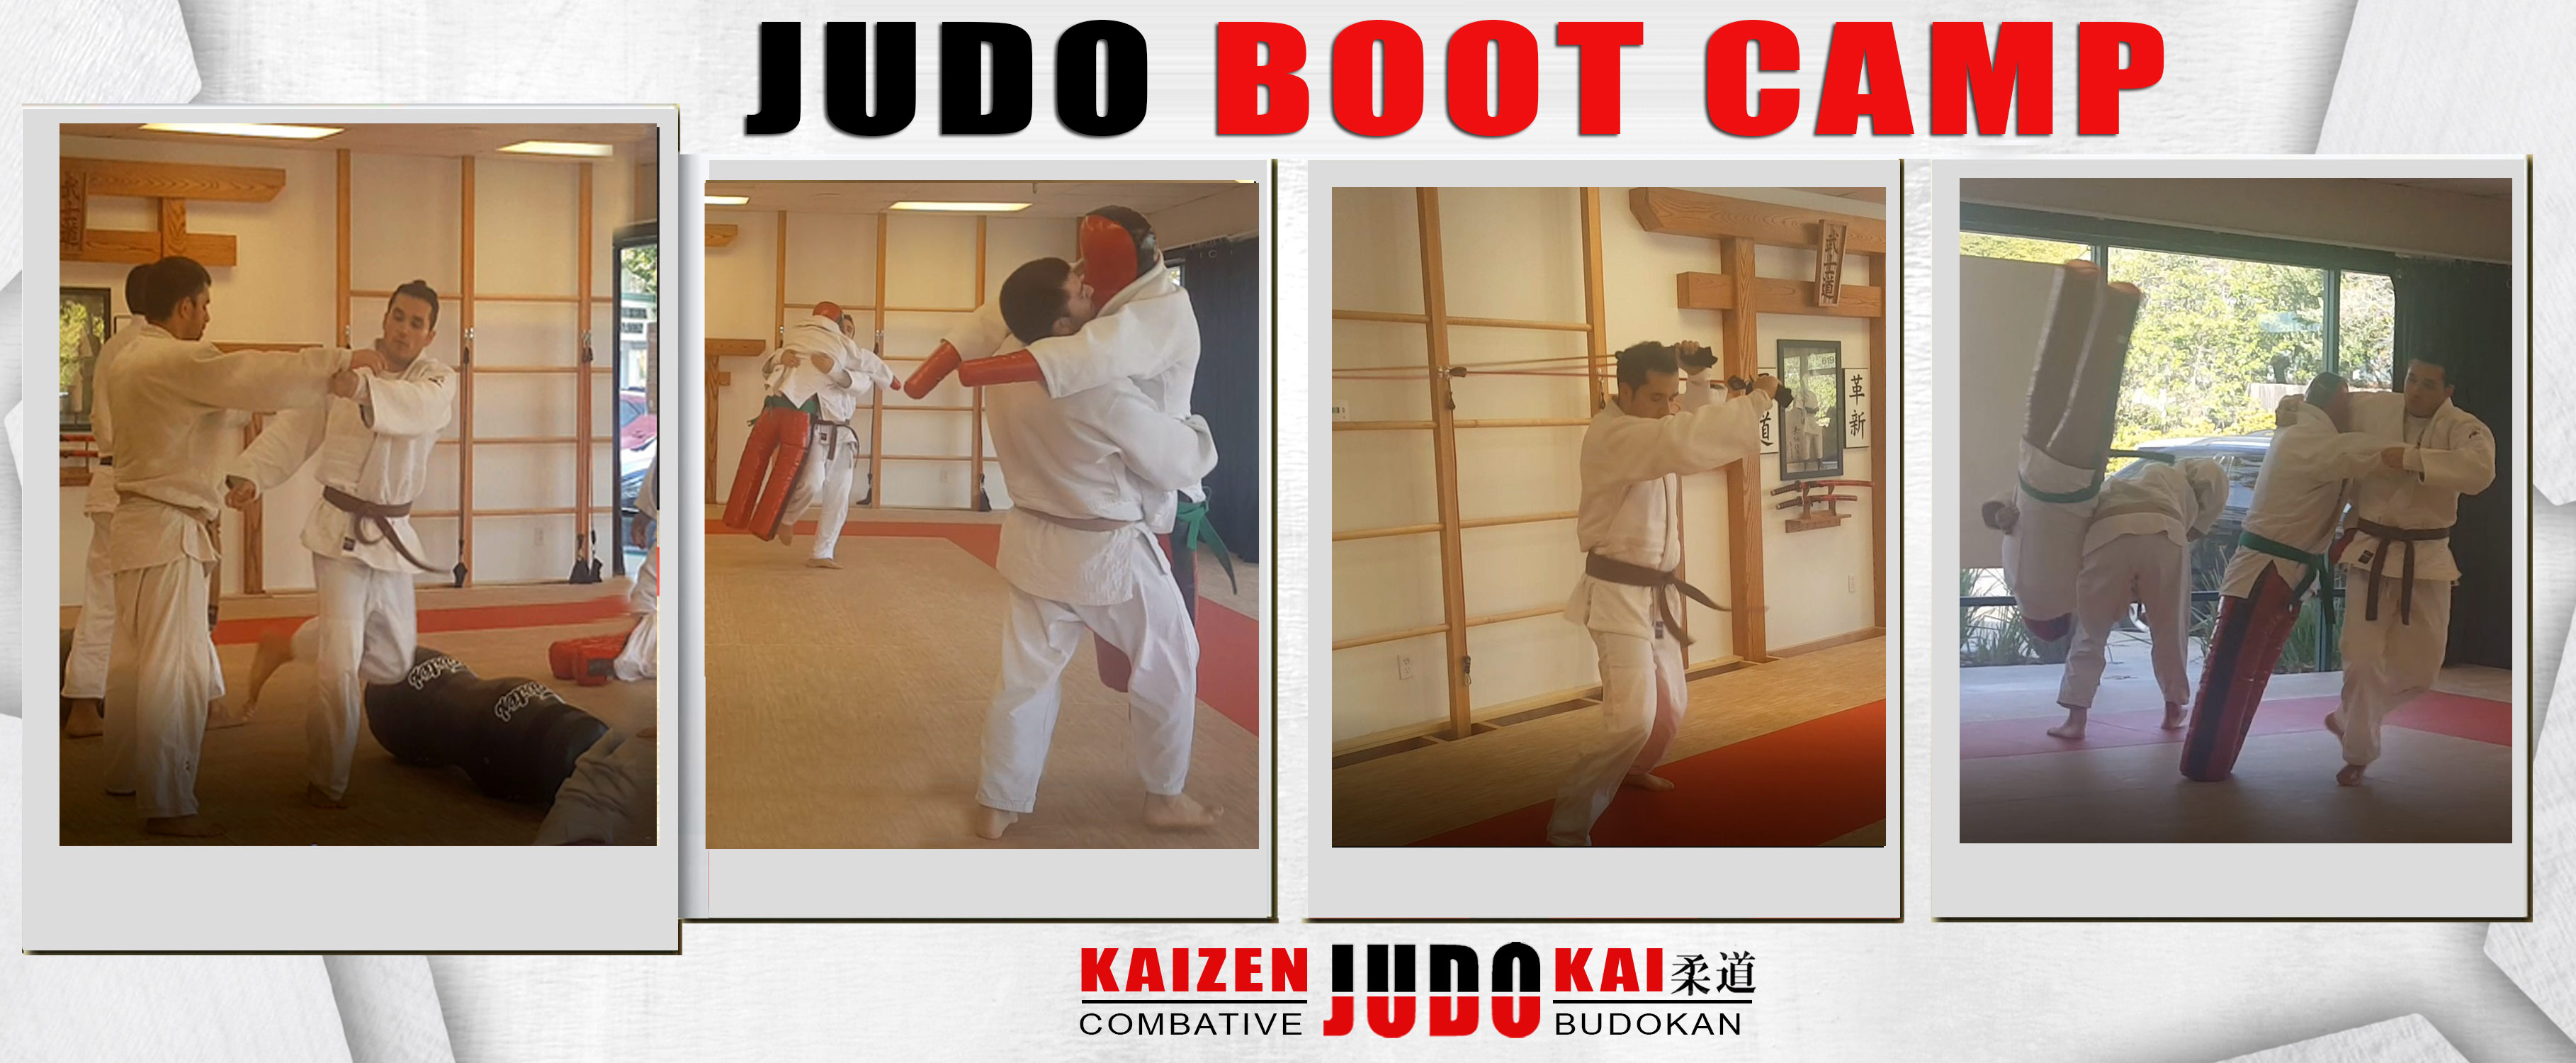 Kaizen Judo Boot Camp